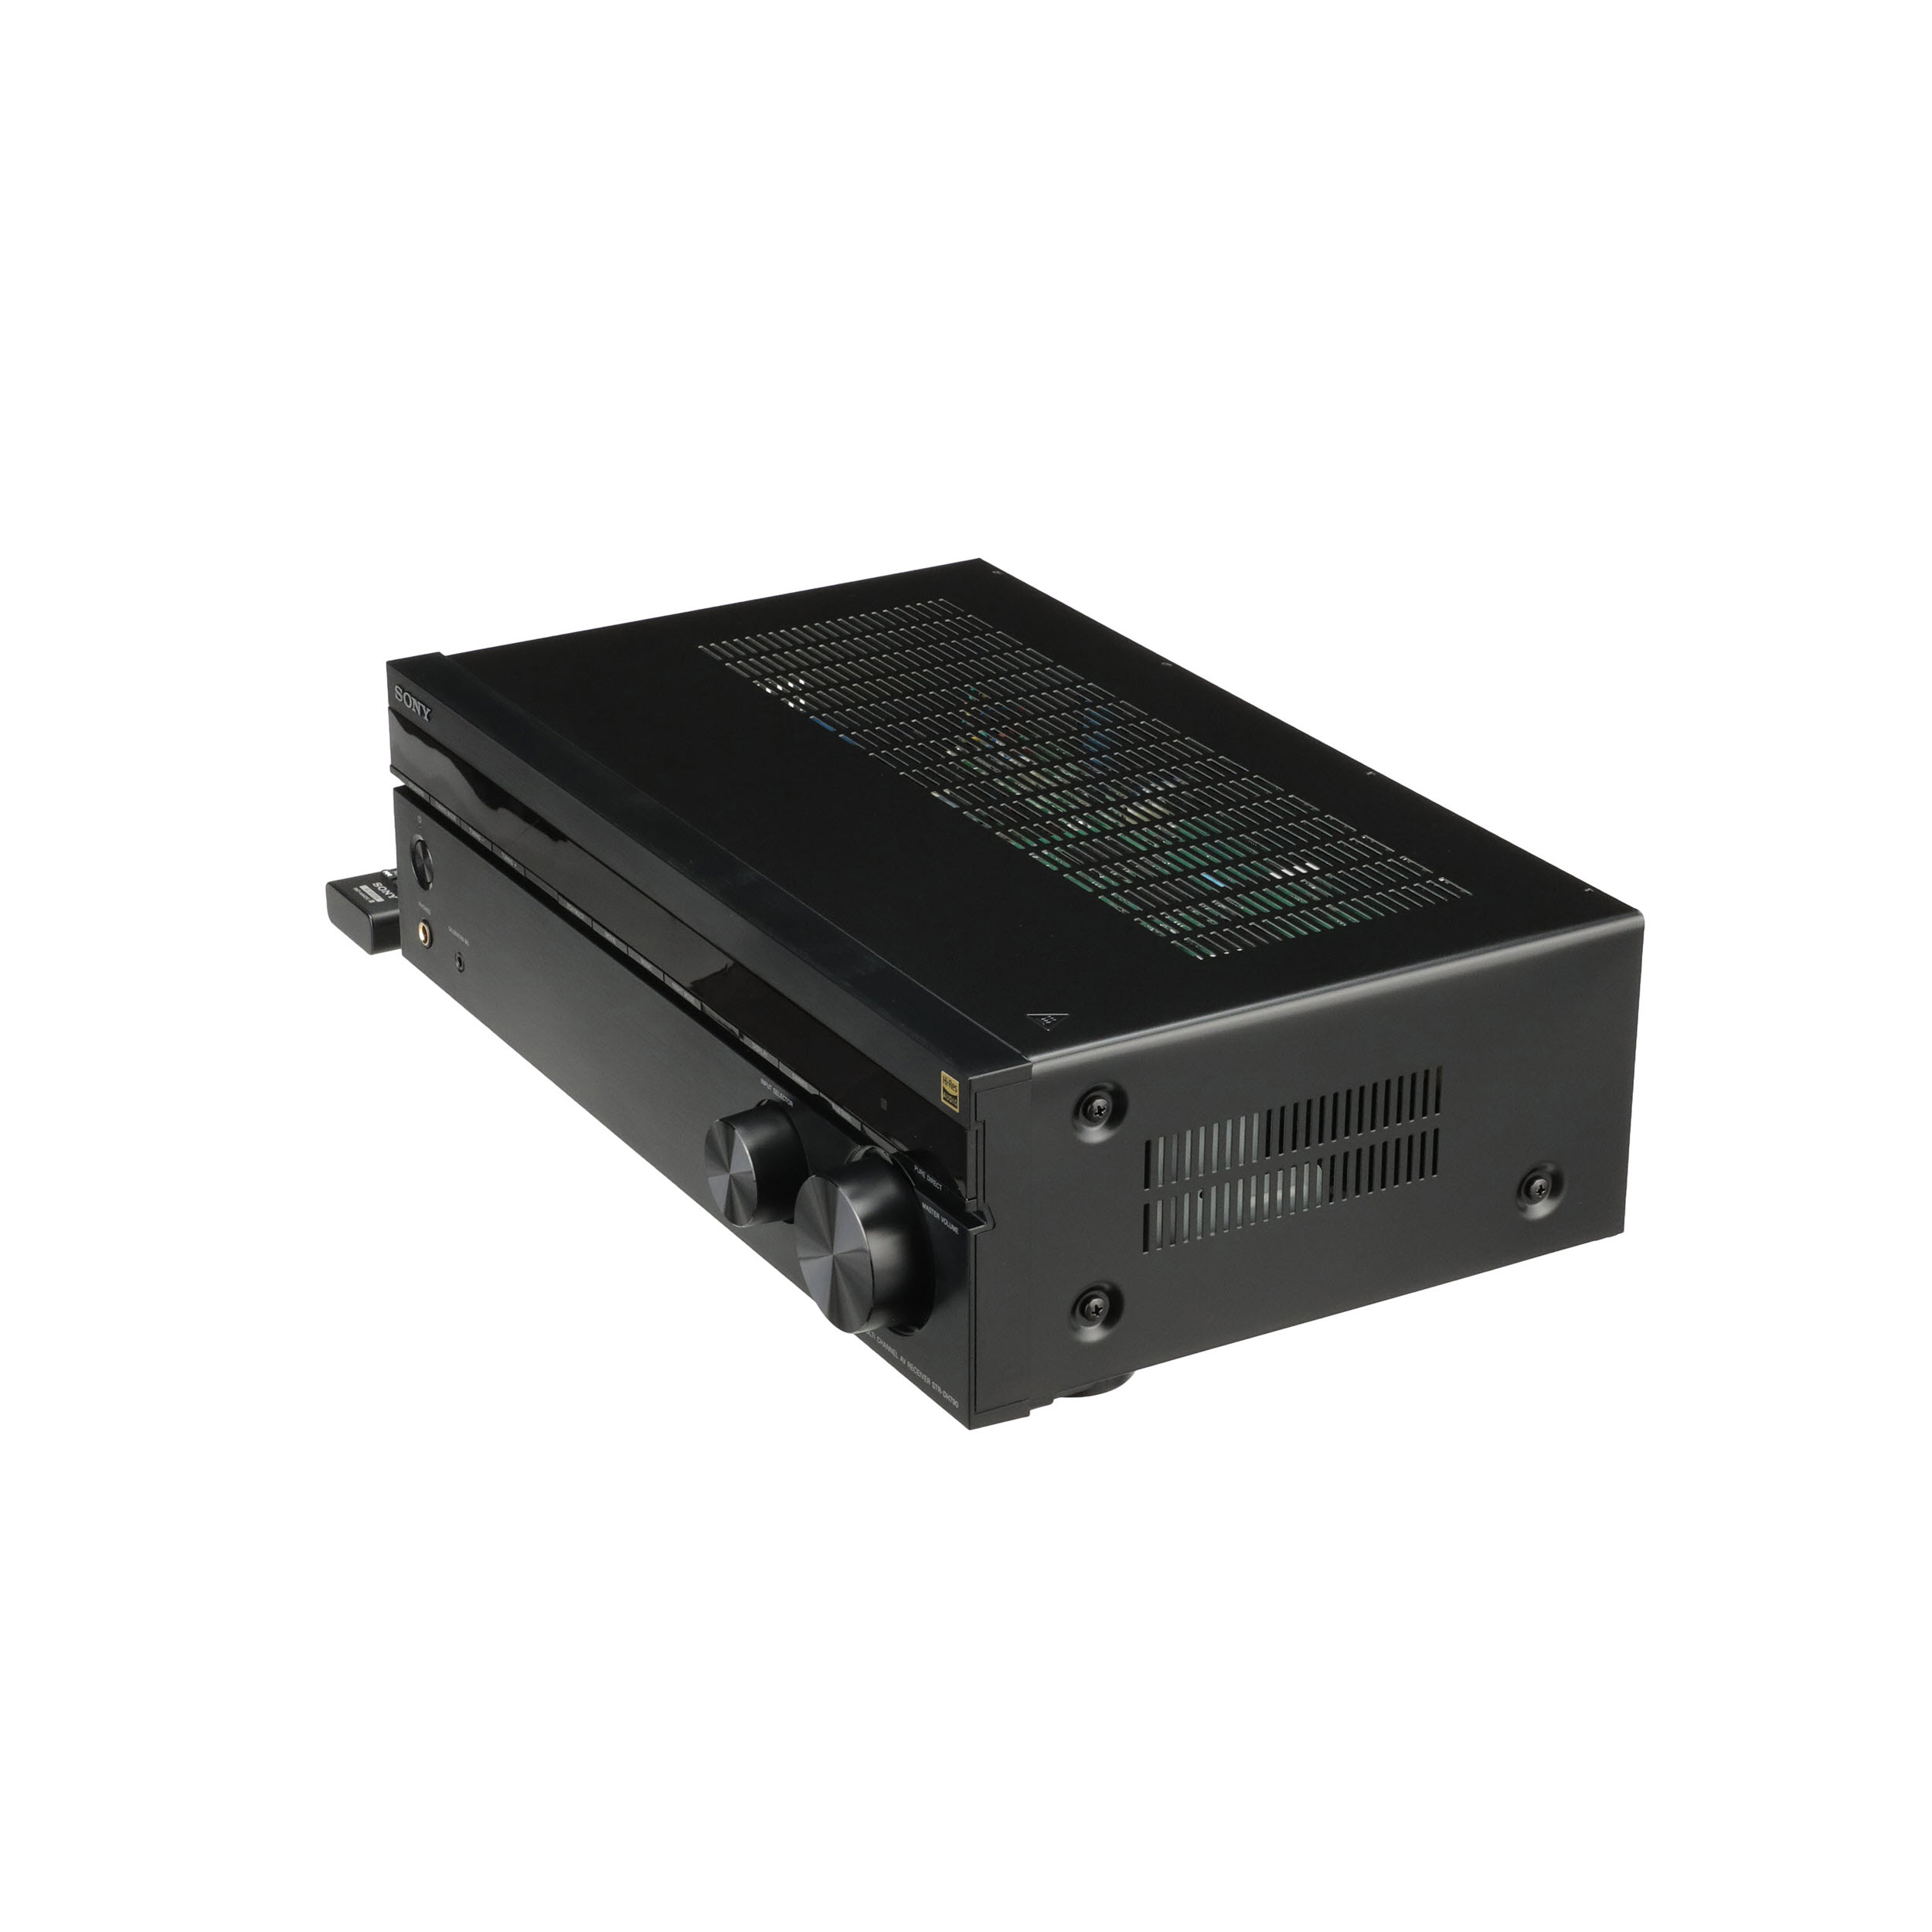 Sony STR-DH770 - AV receiver - 7.2 channel - 7 x 140 Watt 